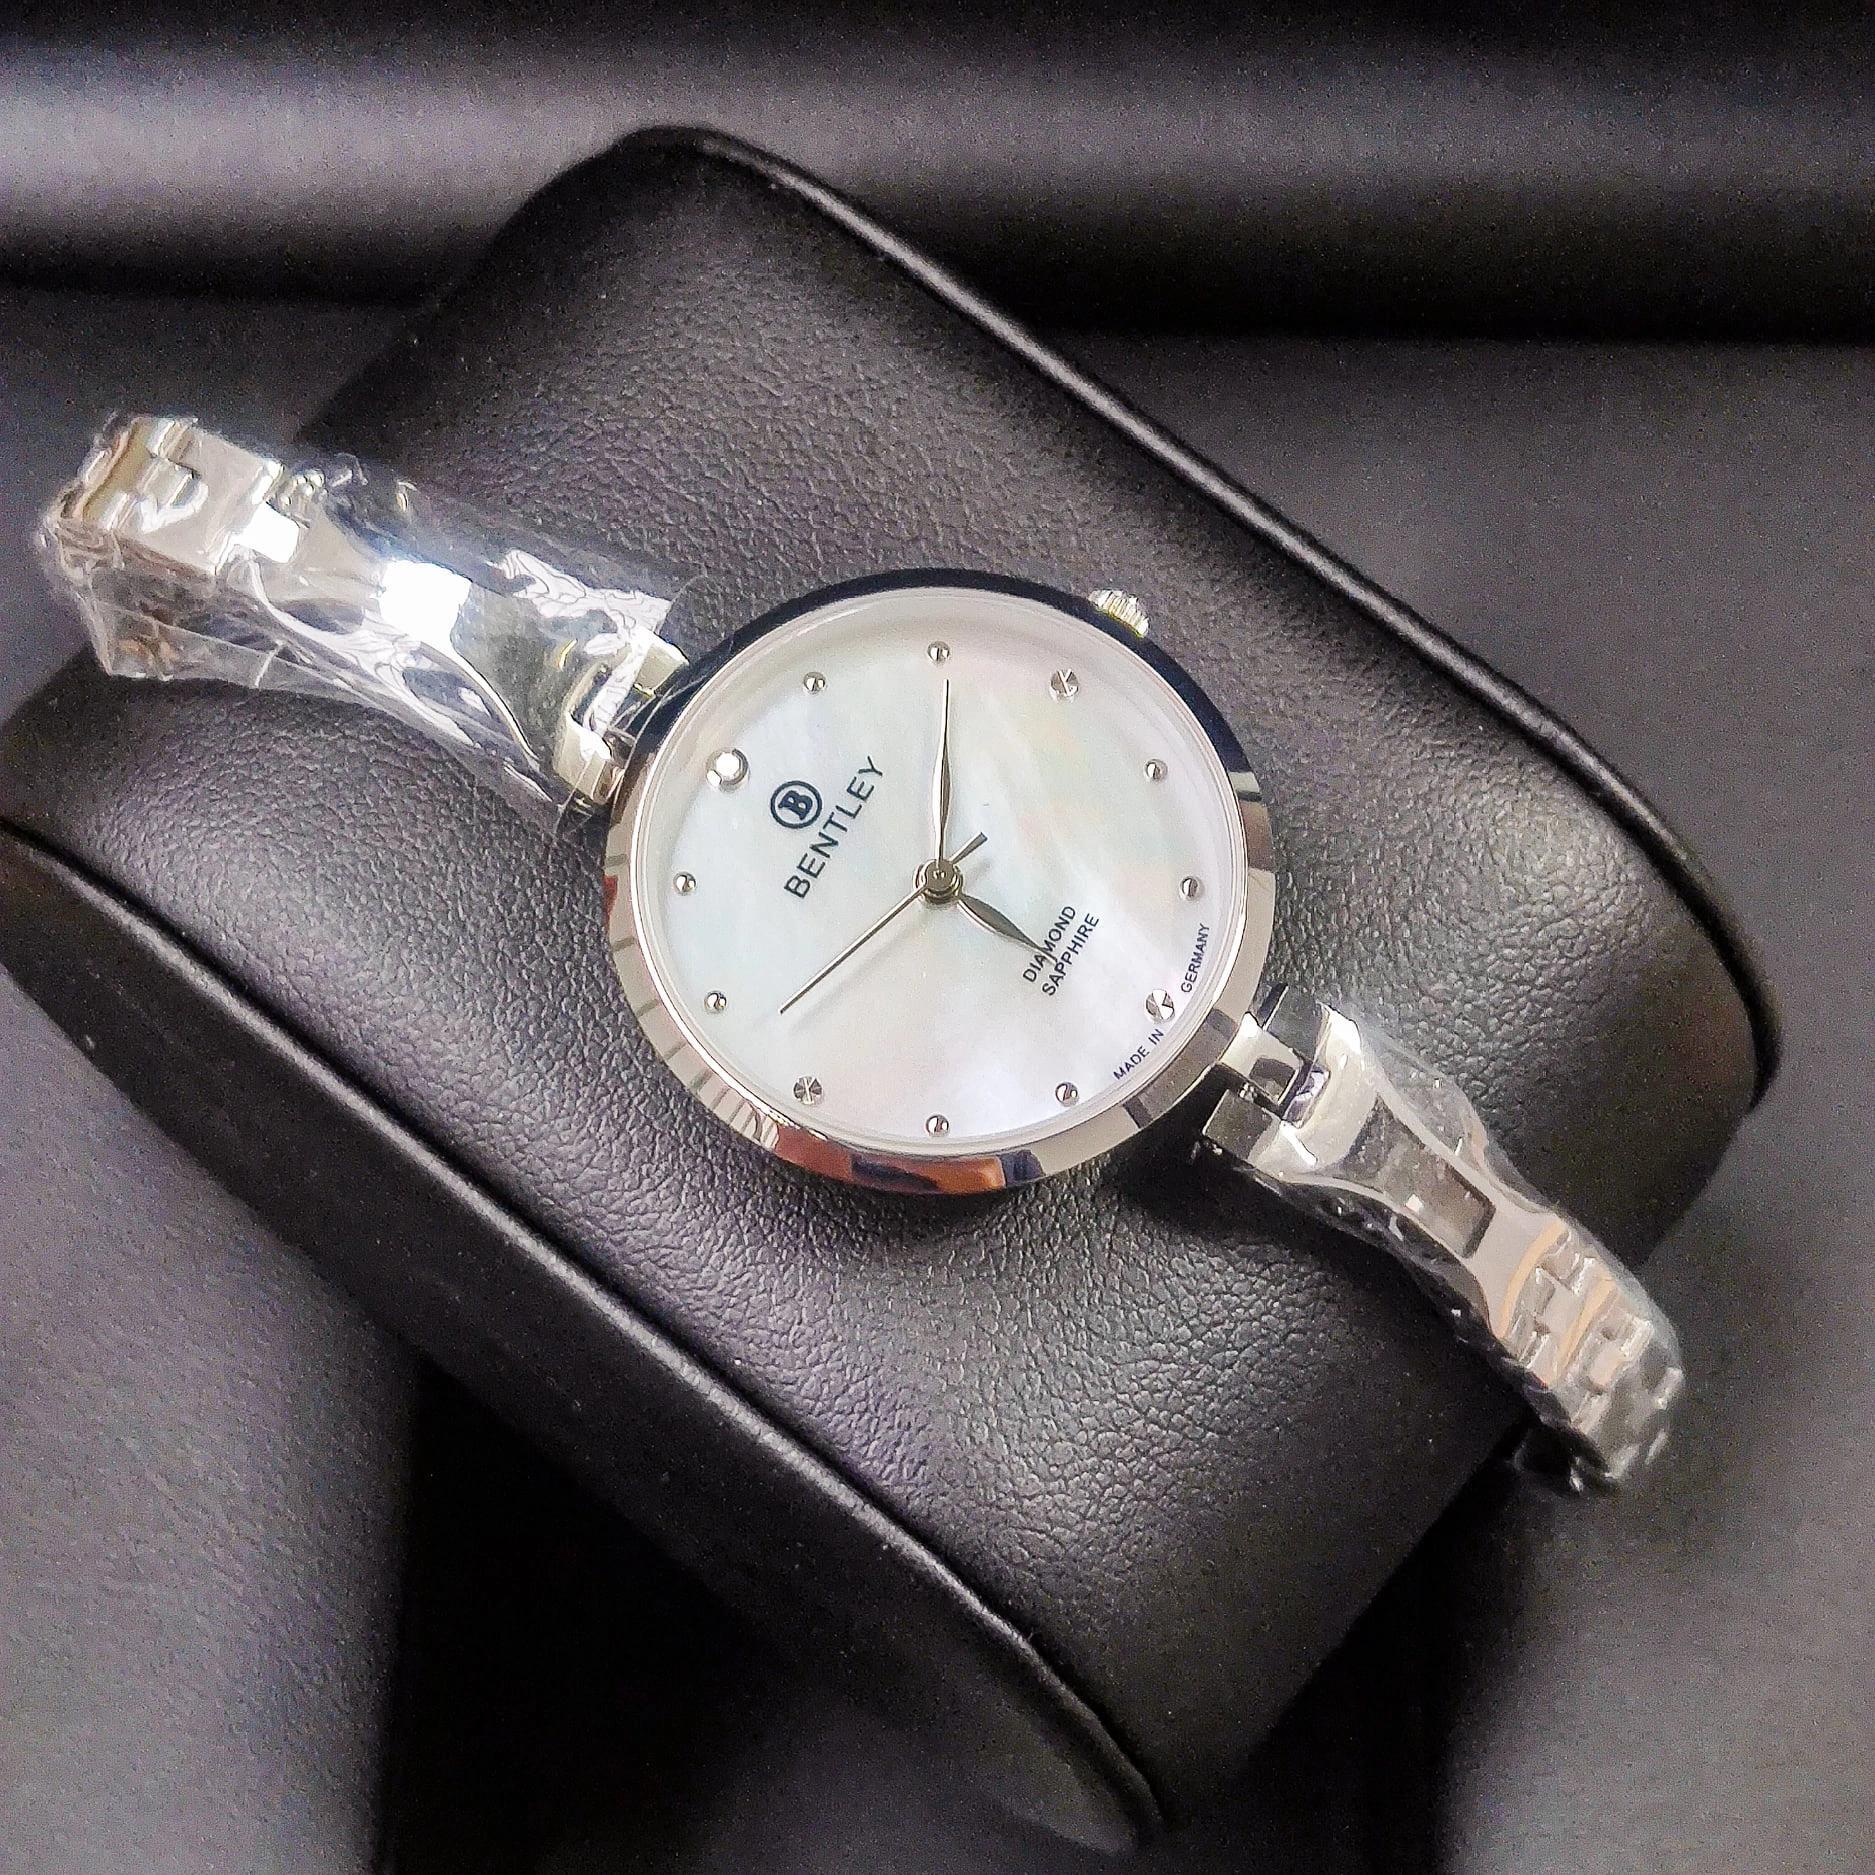 Đồng hồ nữ Bentley Enchanting ERA BL1859